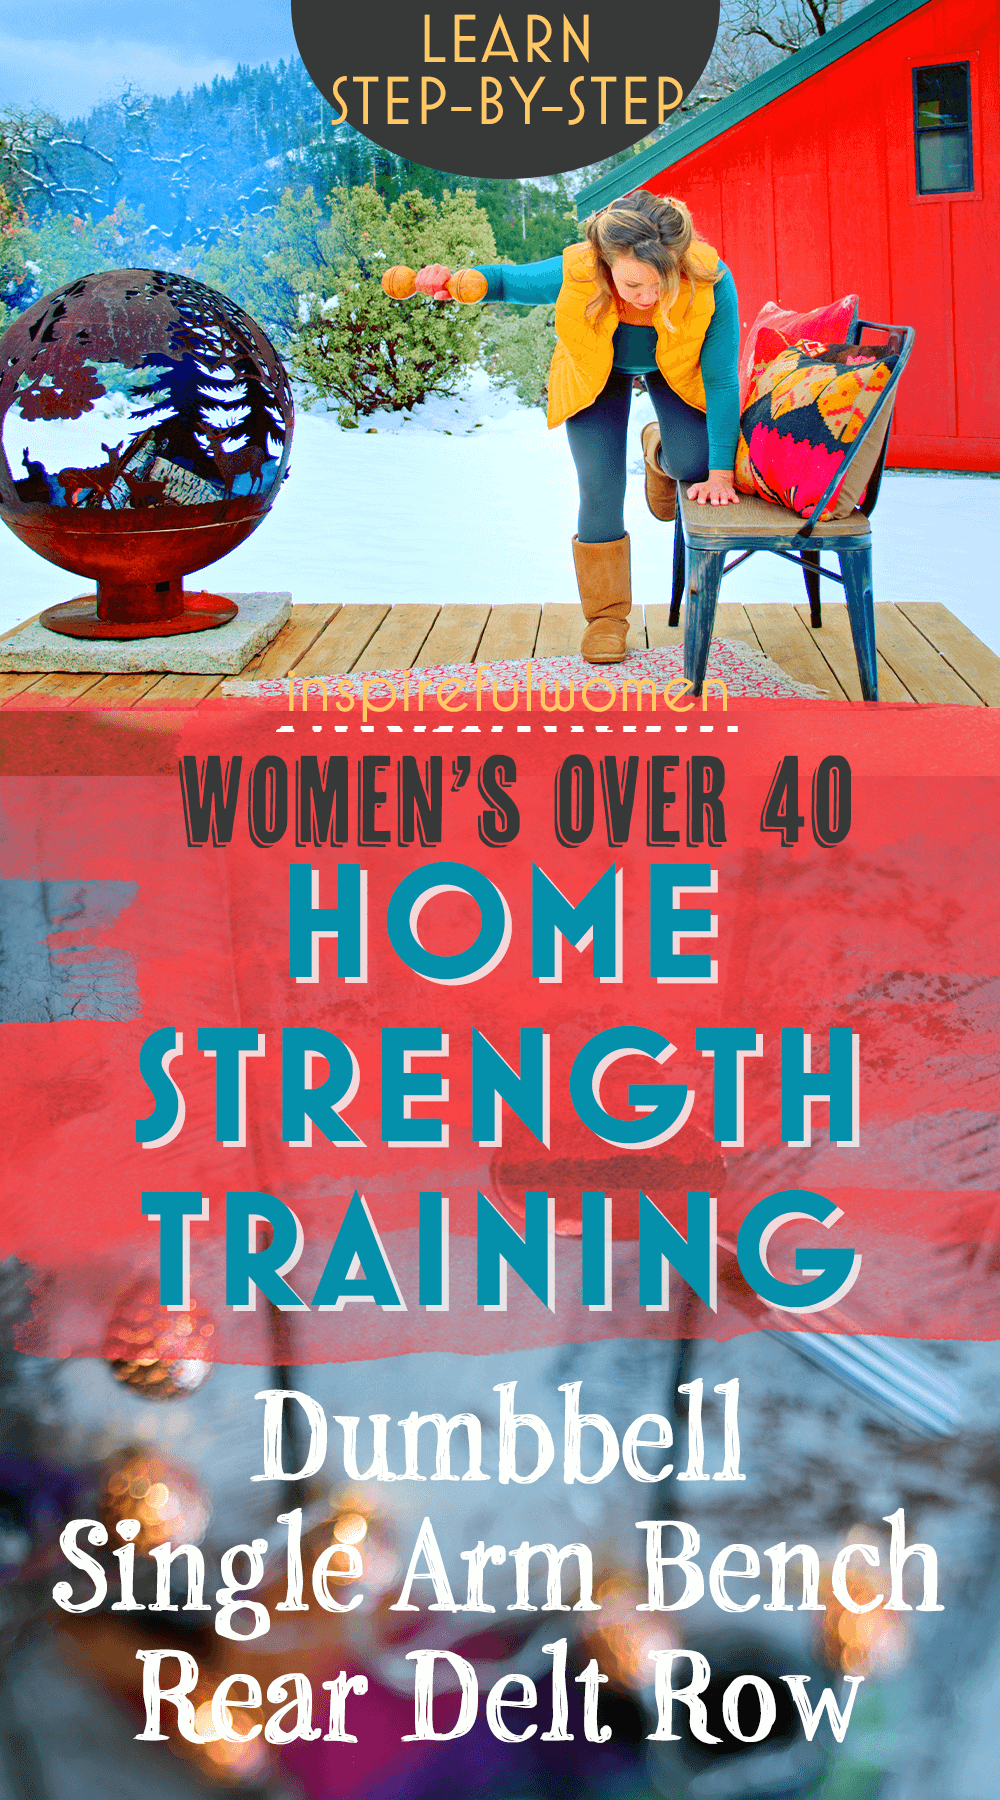 dumbbell-bench-rear-delt-row-shoulder-home-workout-women-over-40